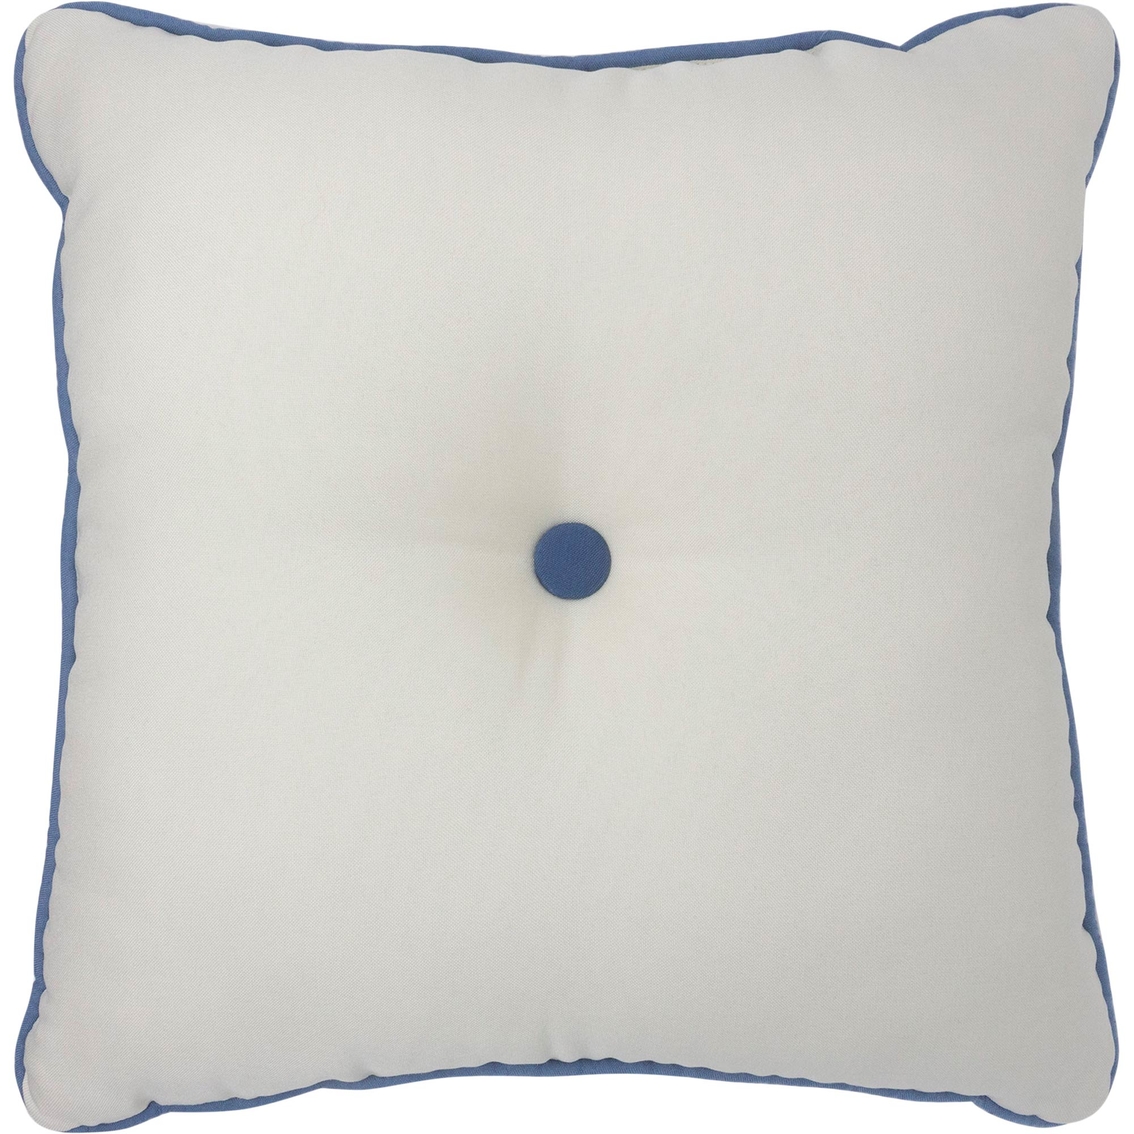 Croscill Janine Fashion Pillow - Image 2 of 2